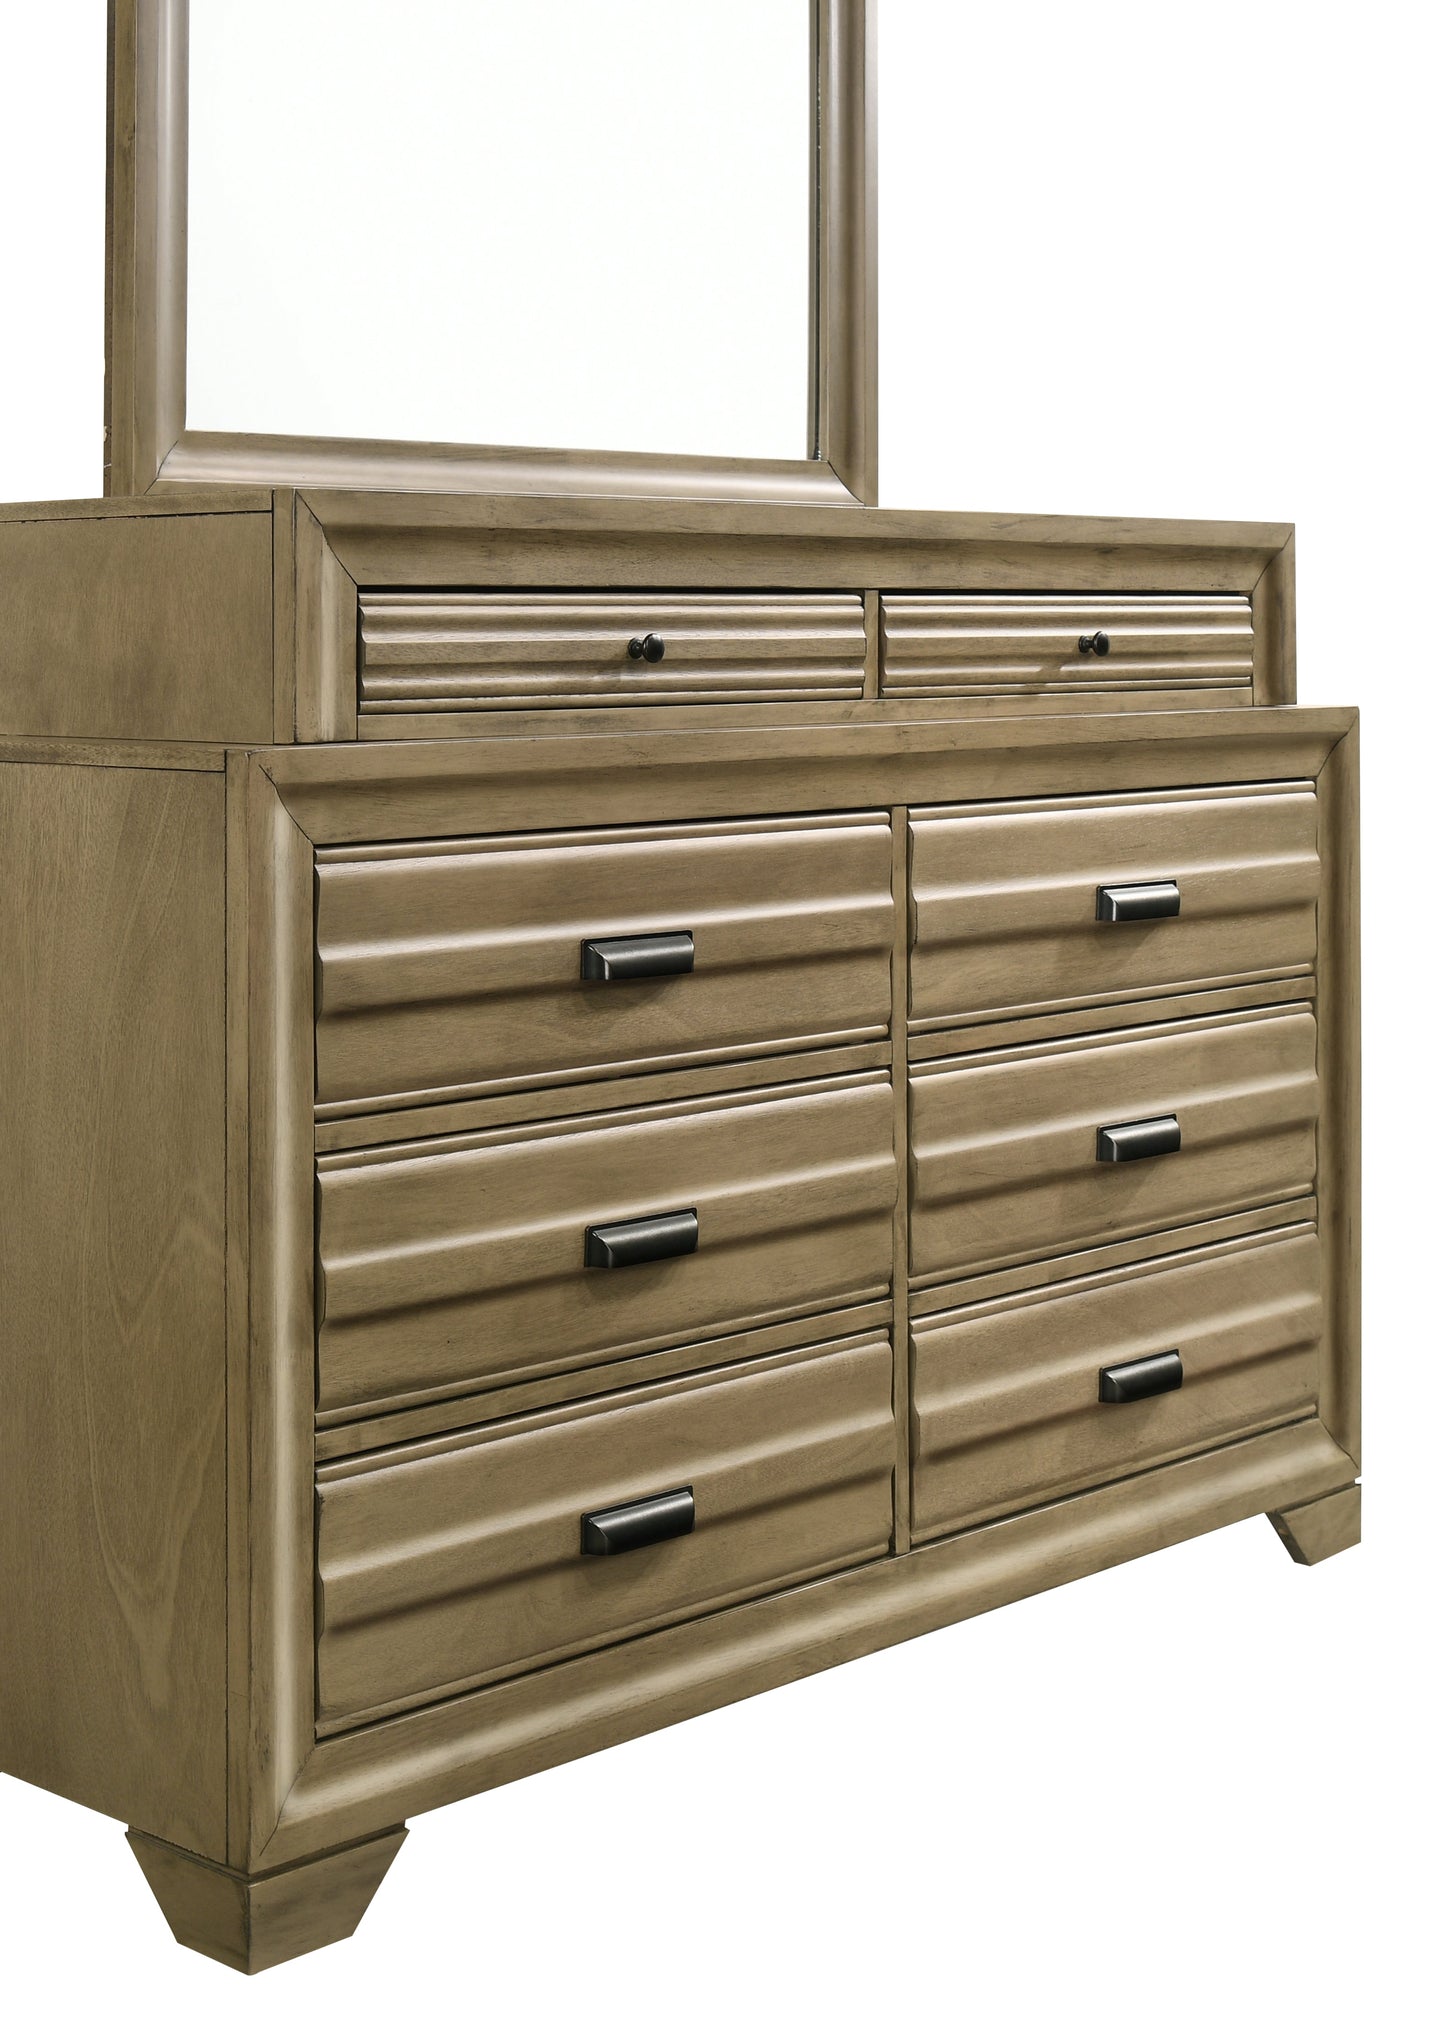 Loiret Light Gray Finish Wood 8-Drawer Dresser with Mirror